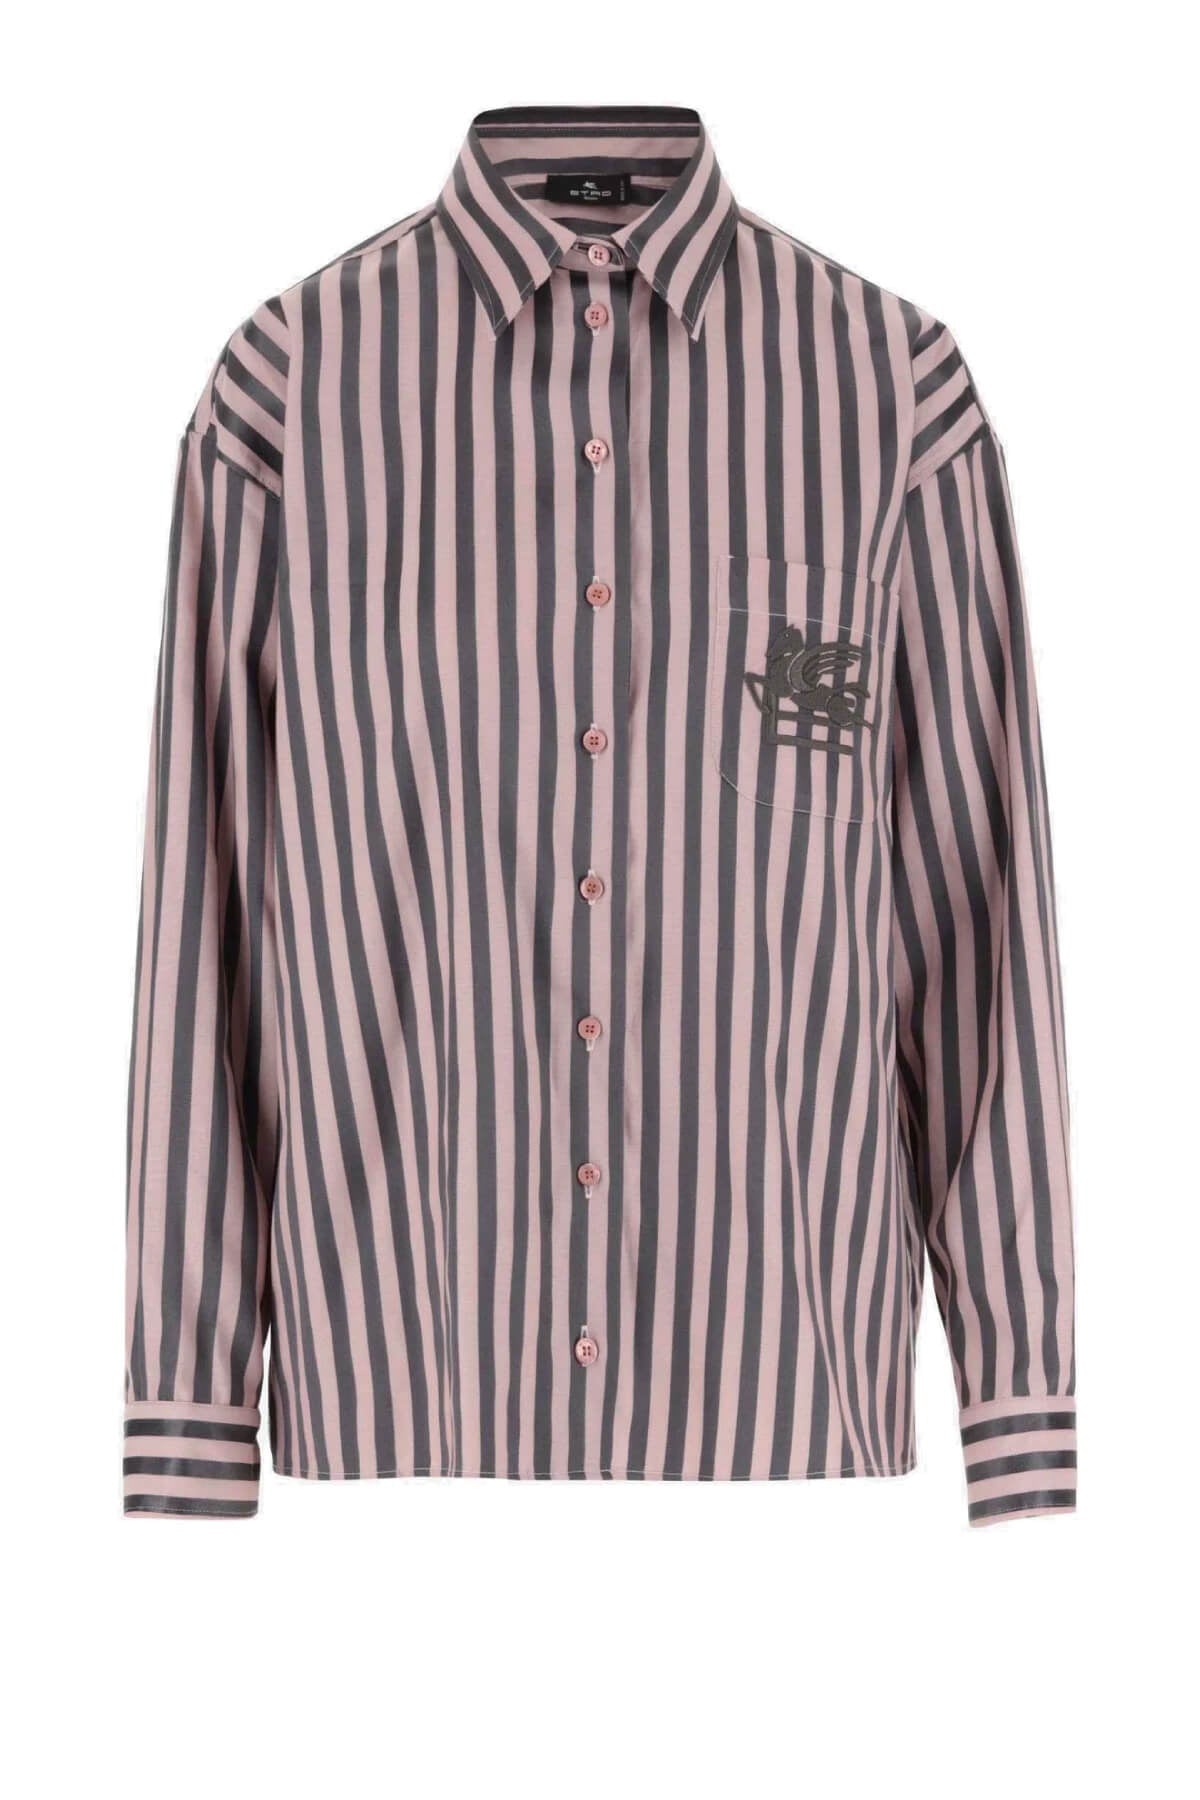 Etro Striped Cotton Shirt - Pink/ Brown